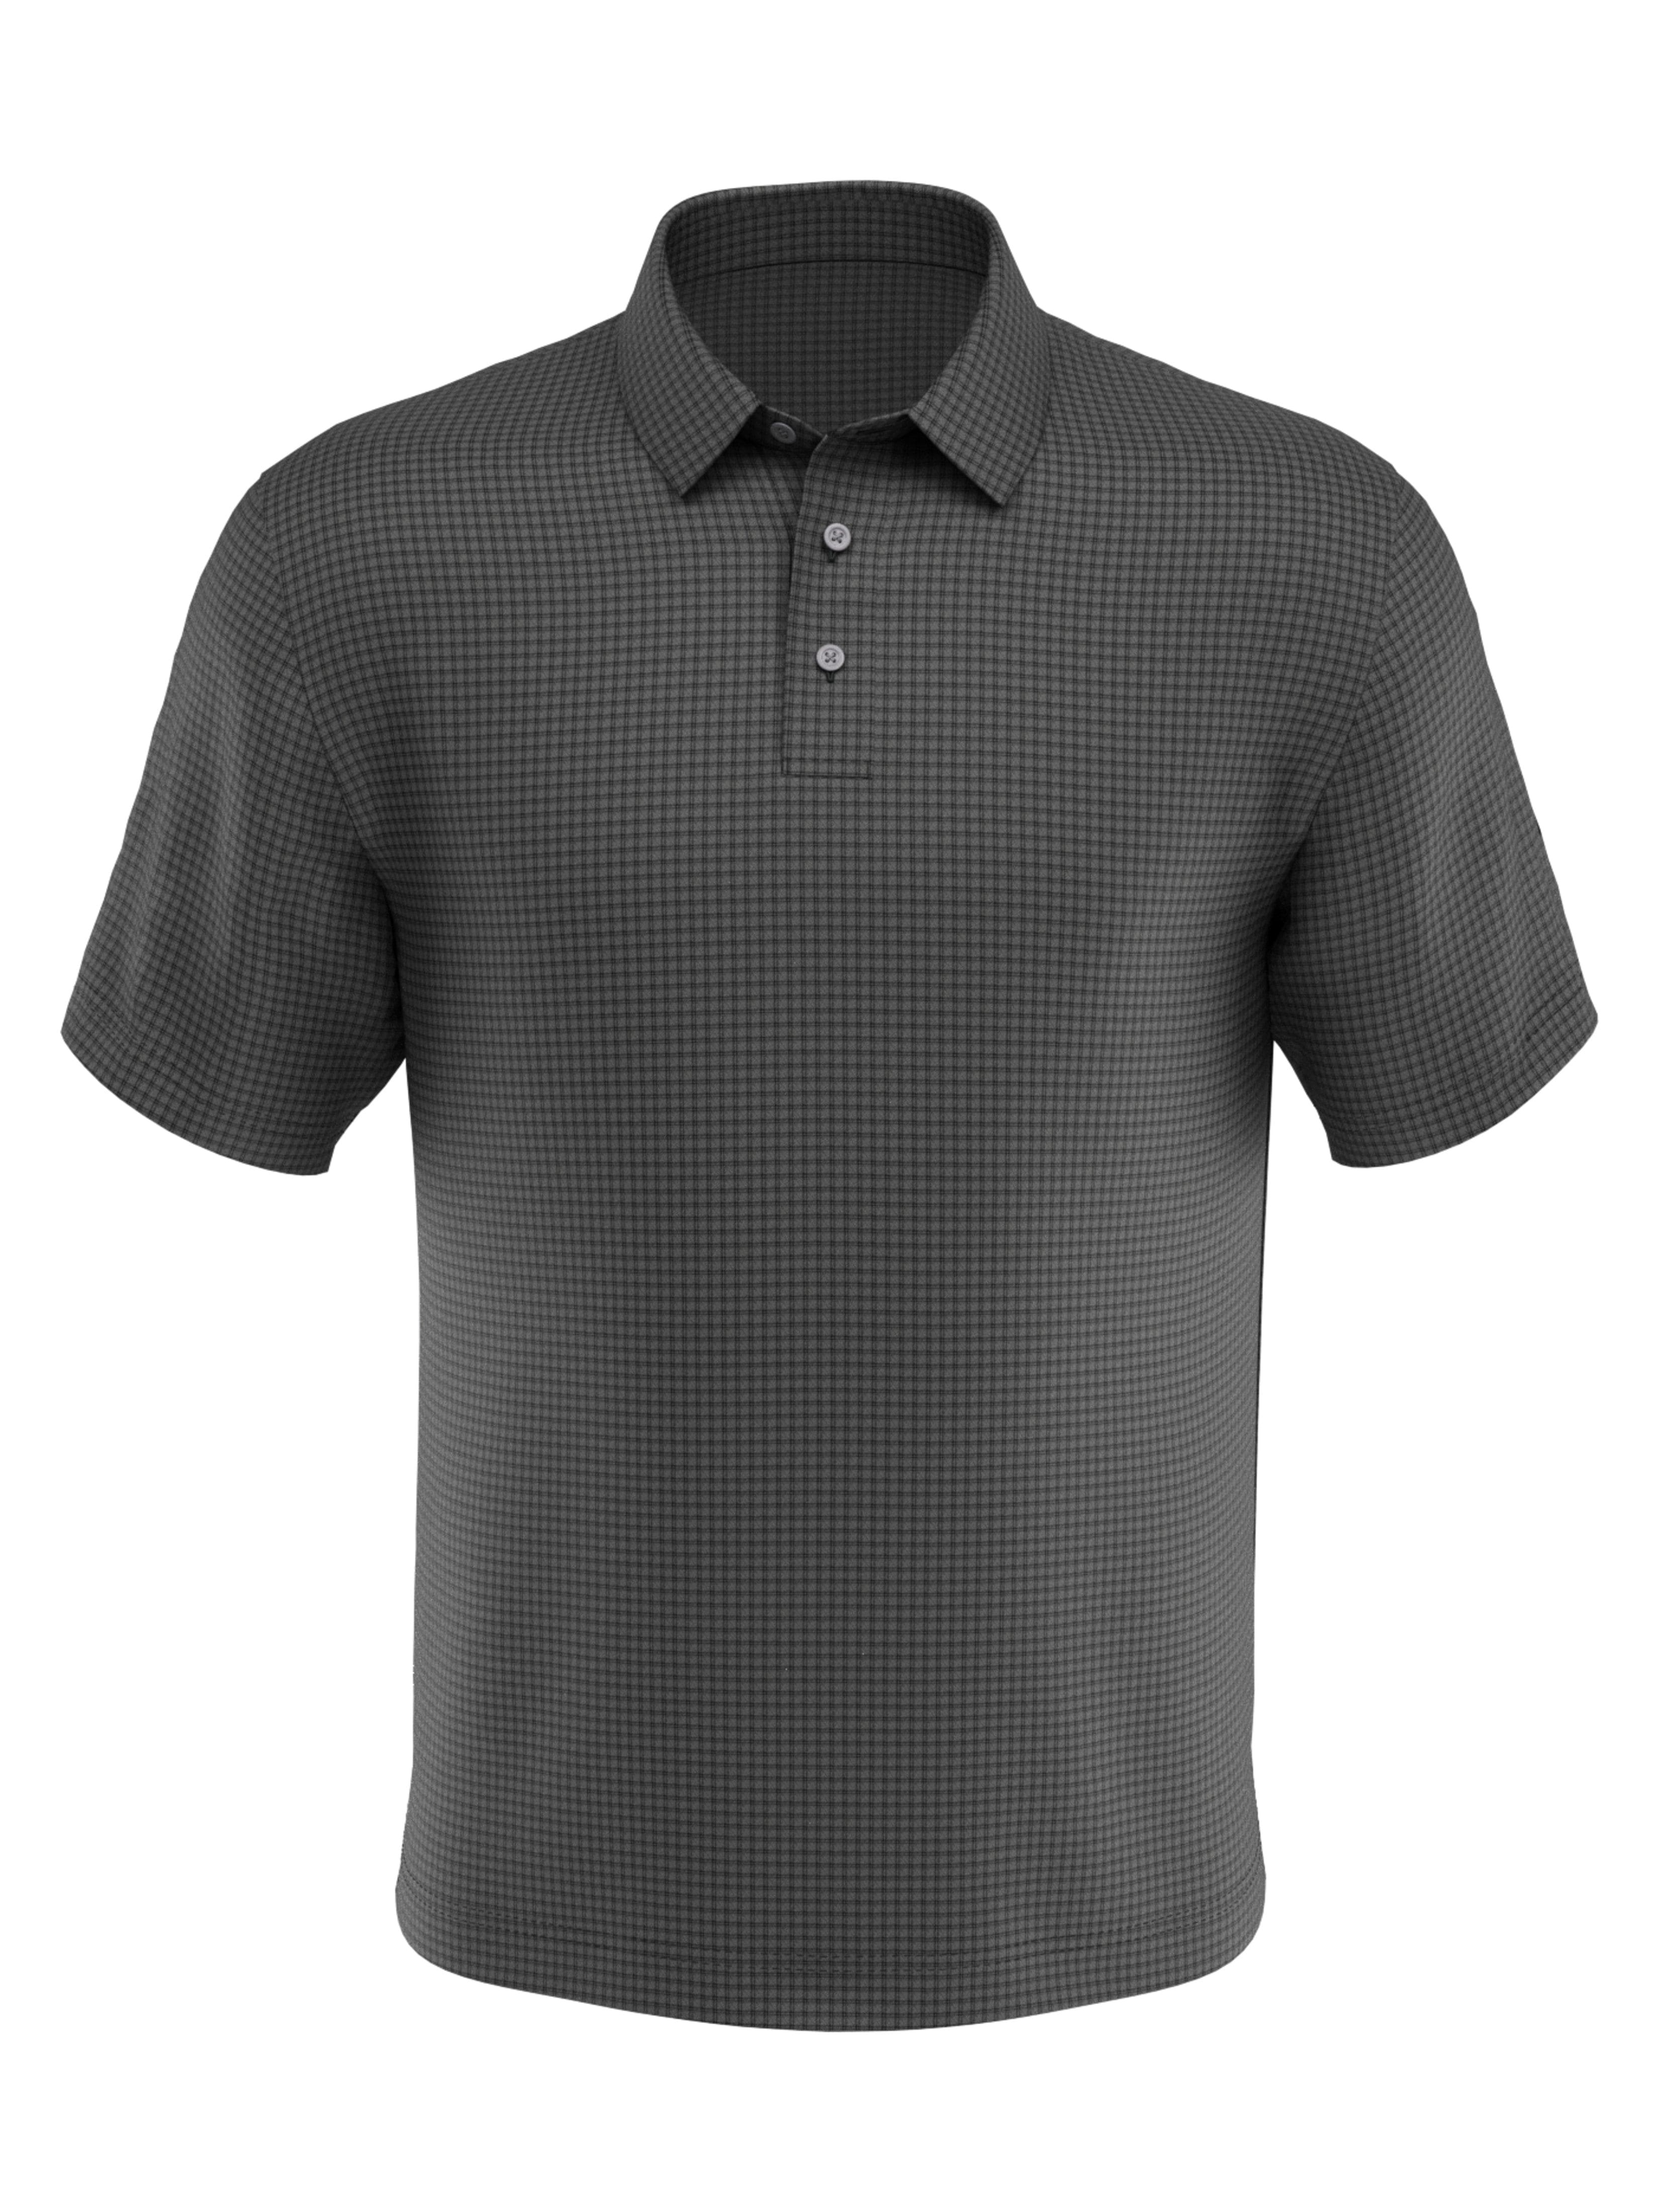 PGA TOUR Apparel Mens Mini Windowpane Heathered Golf Polo Shirt, Size Medium, Grey Heather Gray, 100% Polyester | Golf Apparel Shop